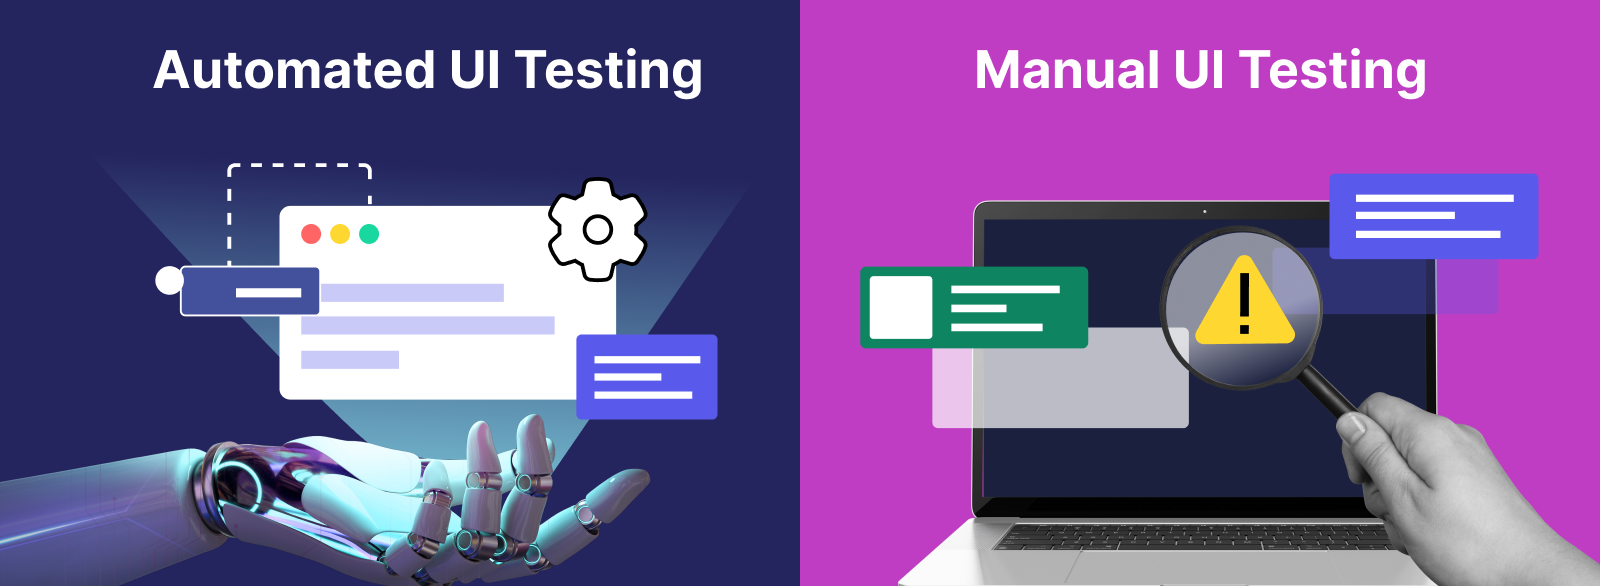 Automated UI Testing vs manual UI testing